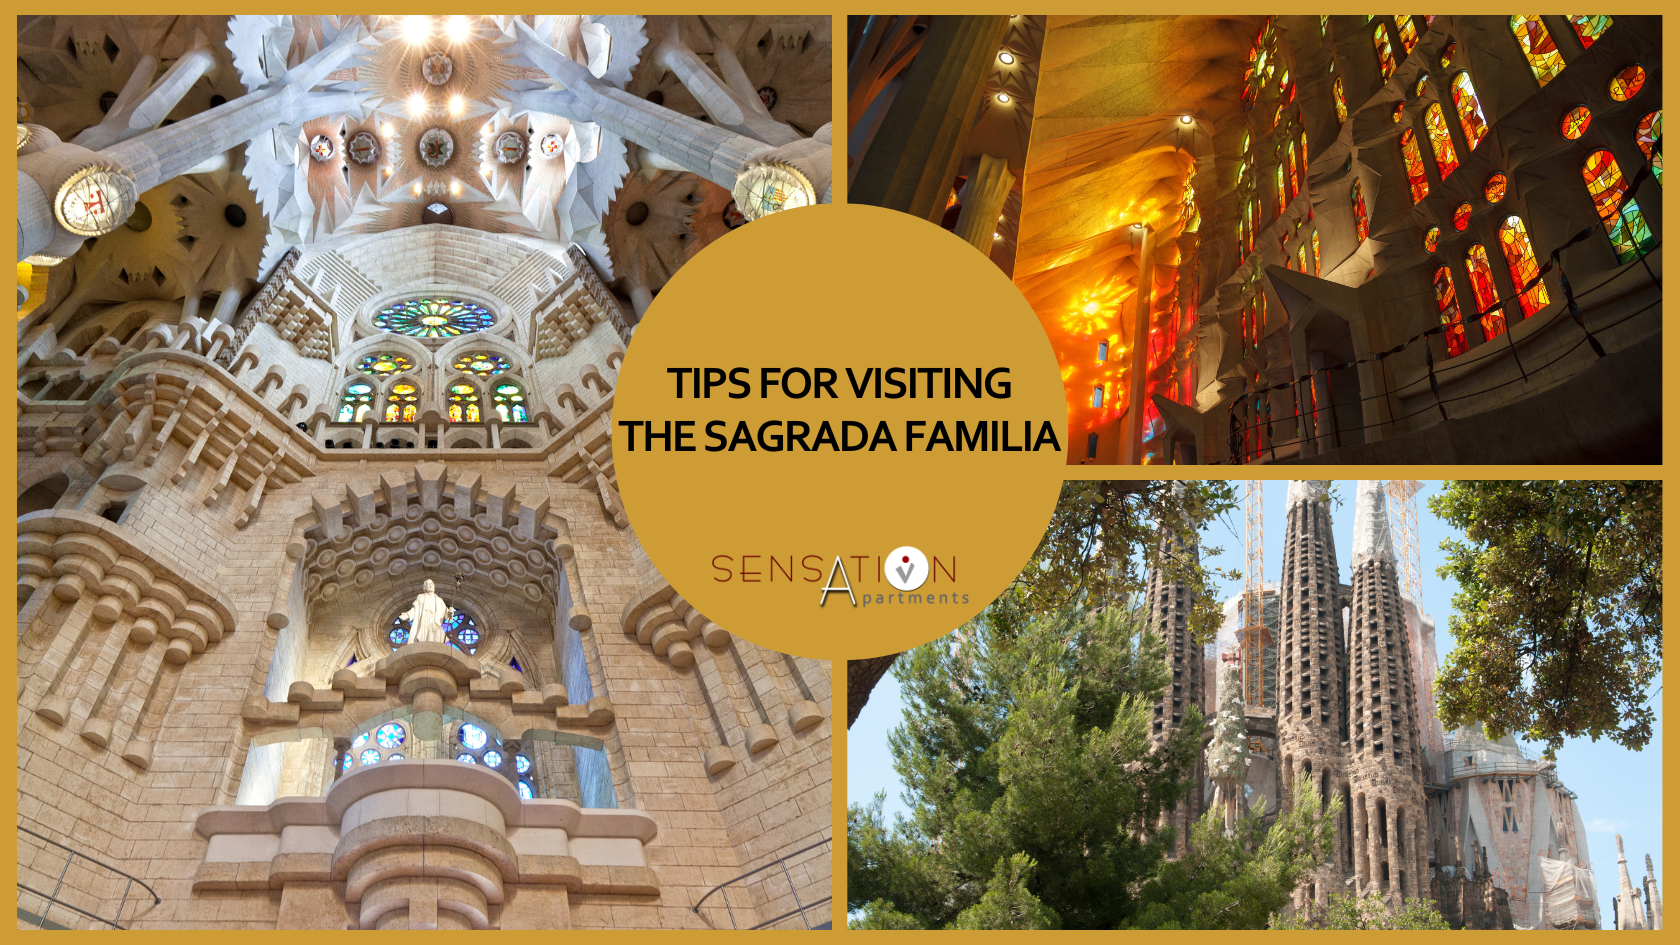 Tips for visiting the Sagrada Familia